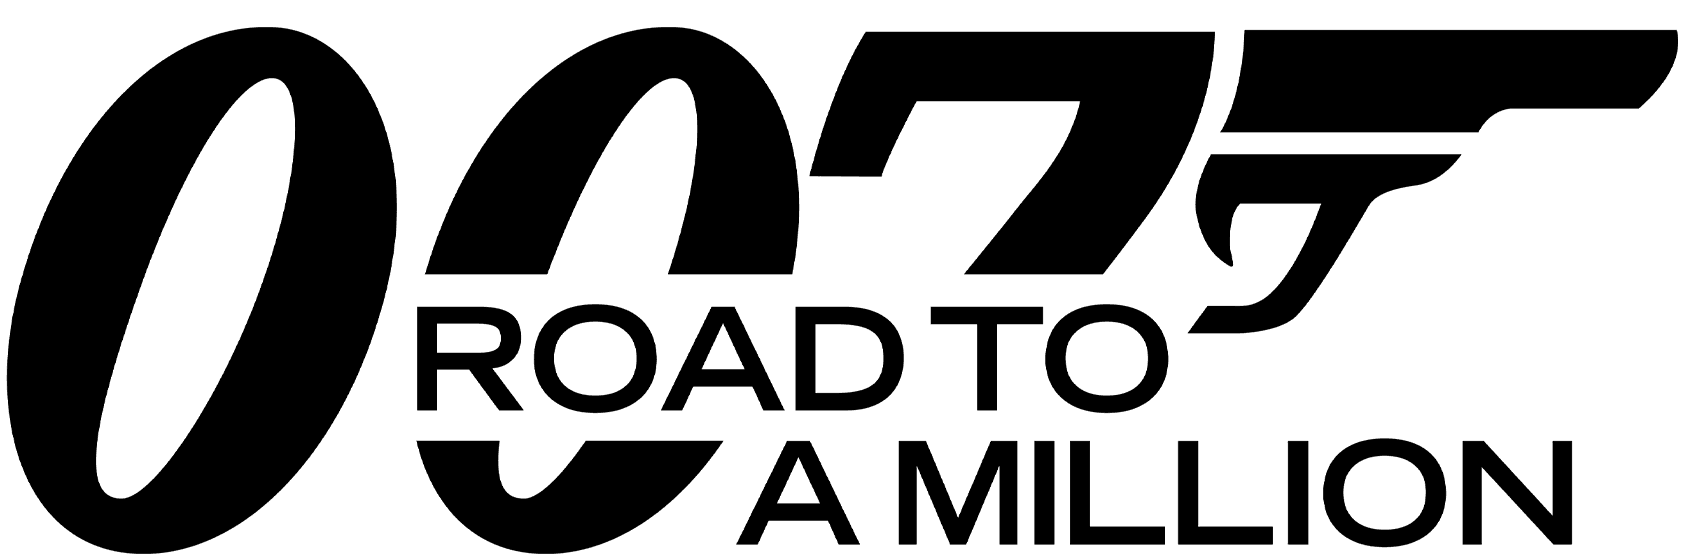 007: Road to a Million logo